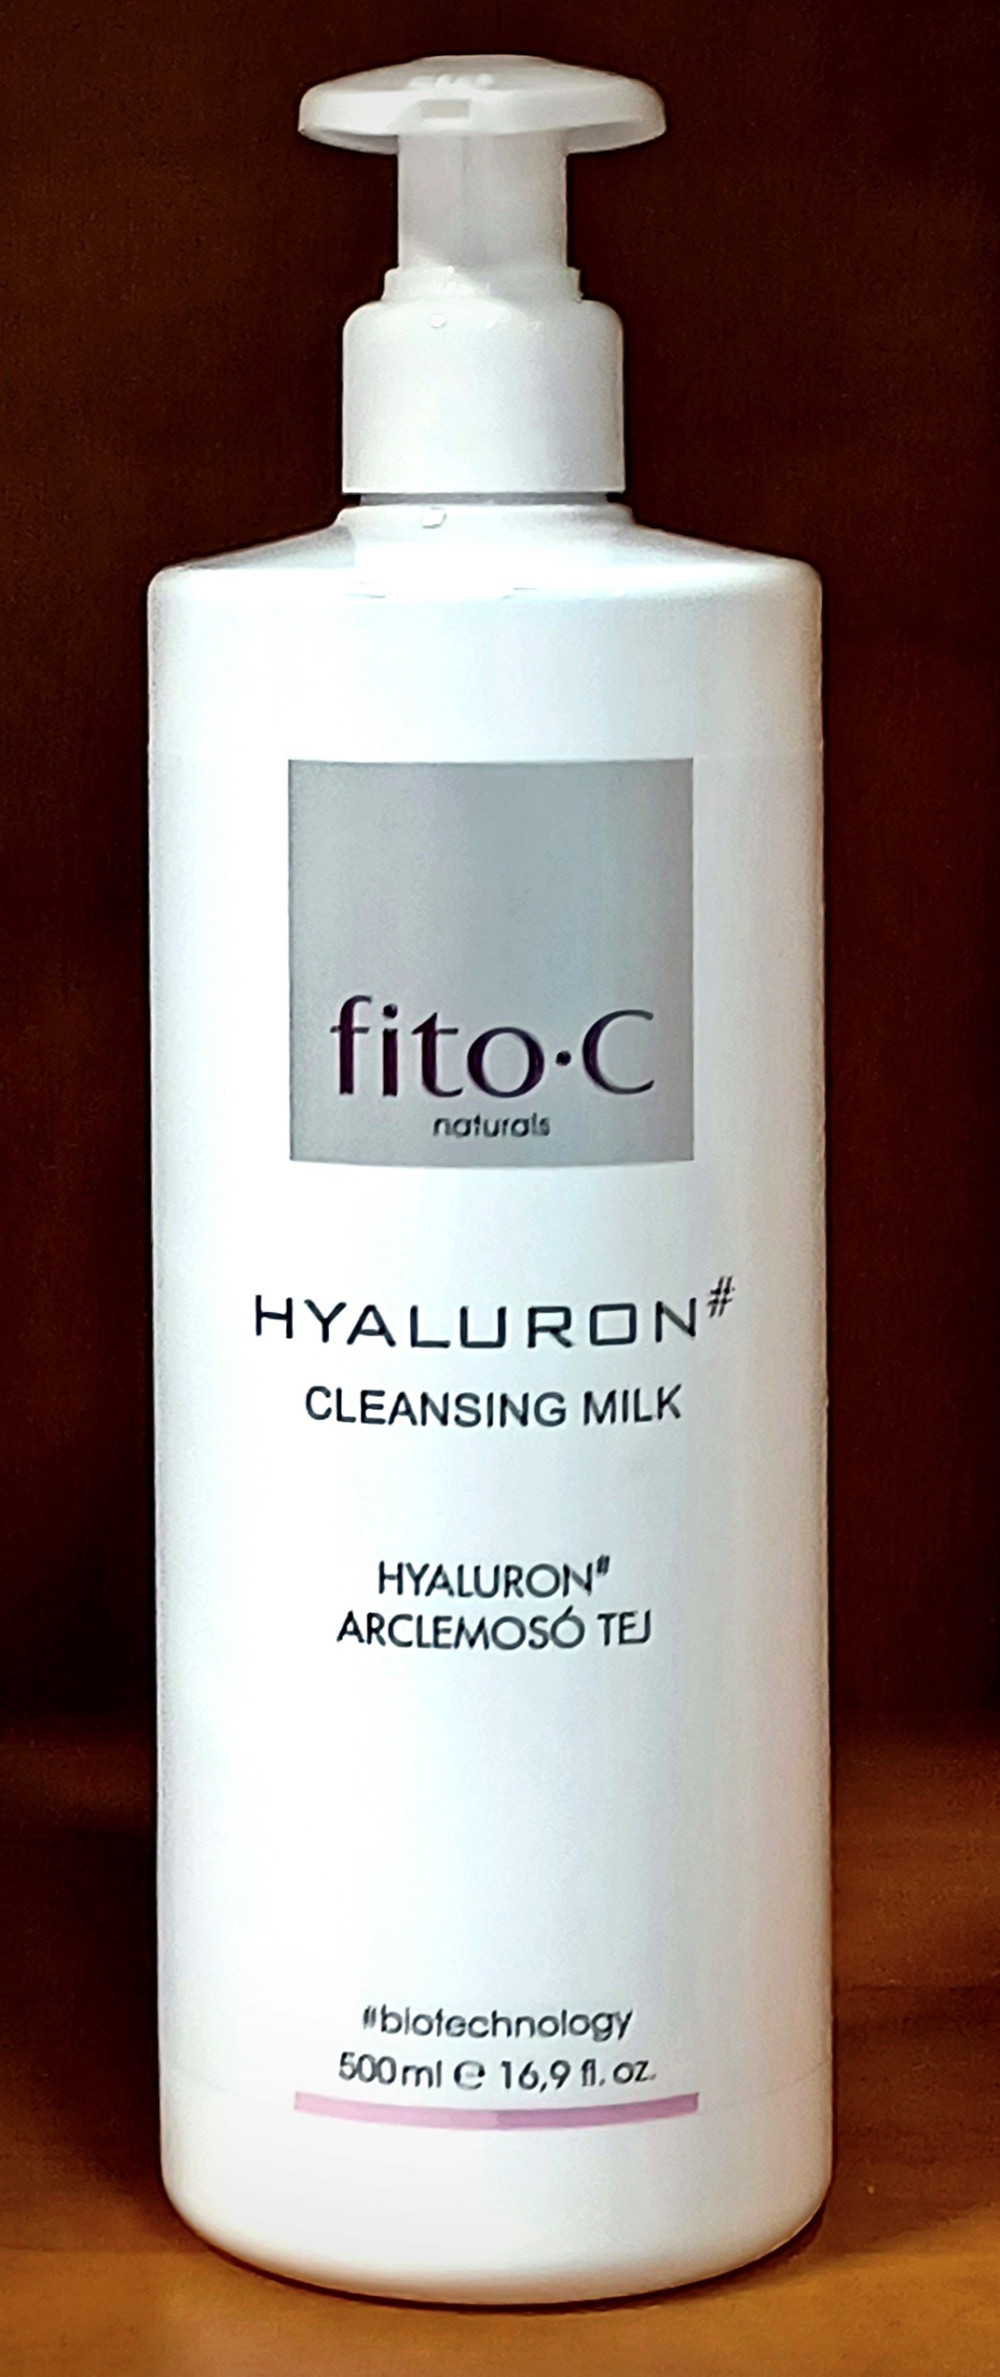 fito.C - HYALURON CLEANSING MILK - HYALURON ARCLEMOSÓ TEJ, 500ML